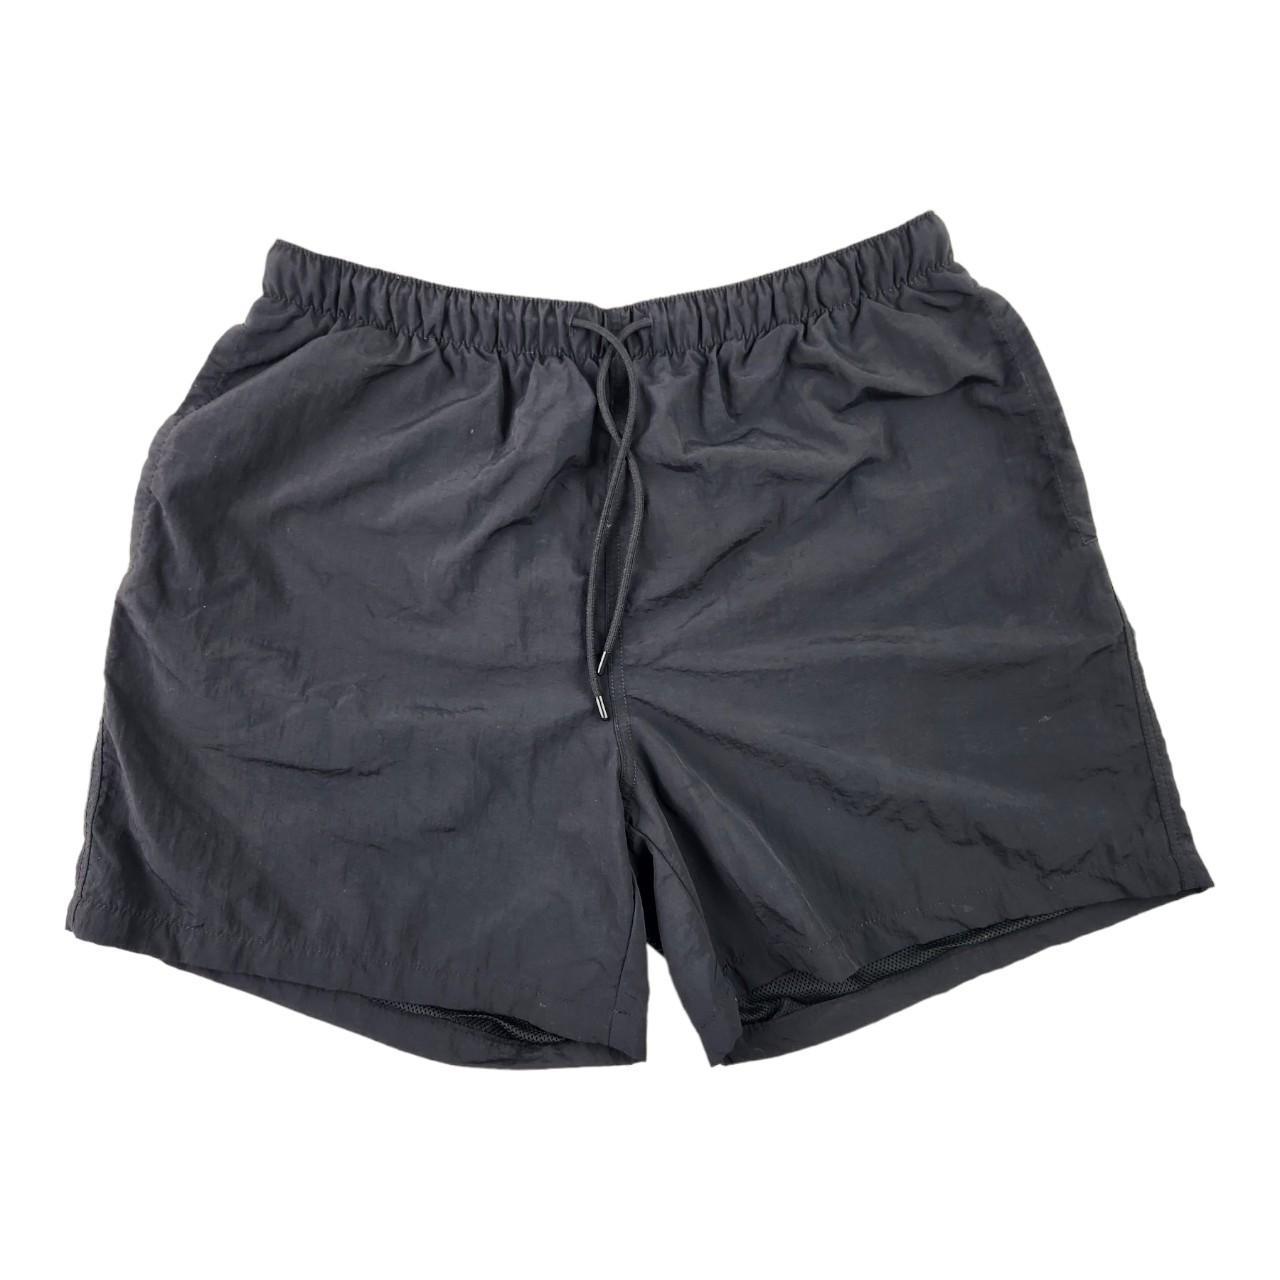 LCKR Brand by Footlocker Training Shorts Black Very... - Depop